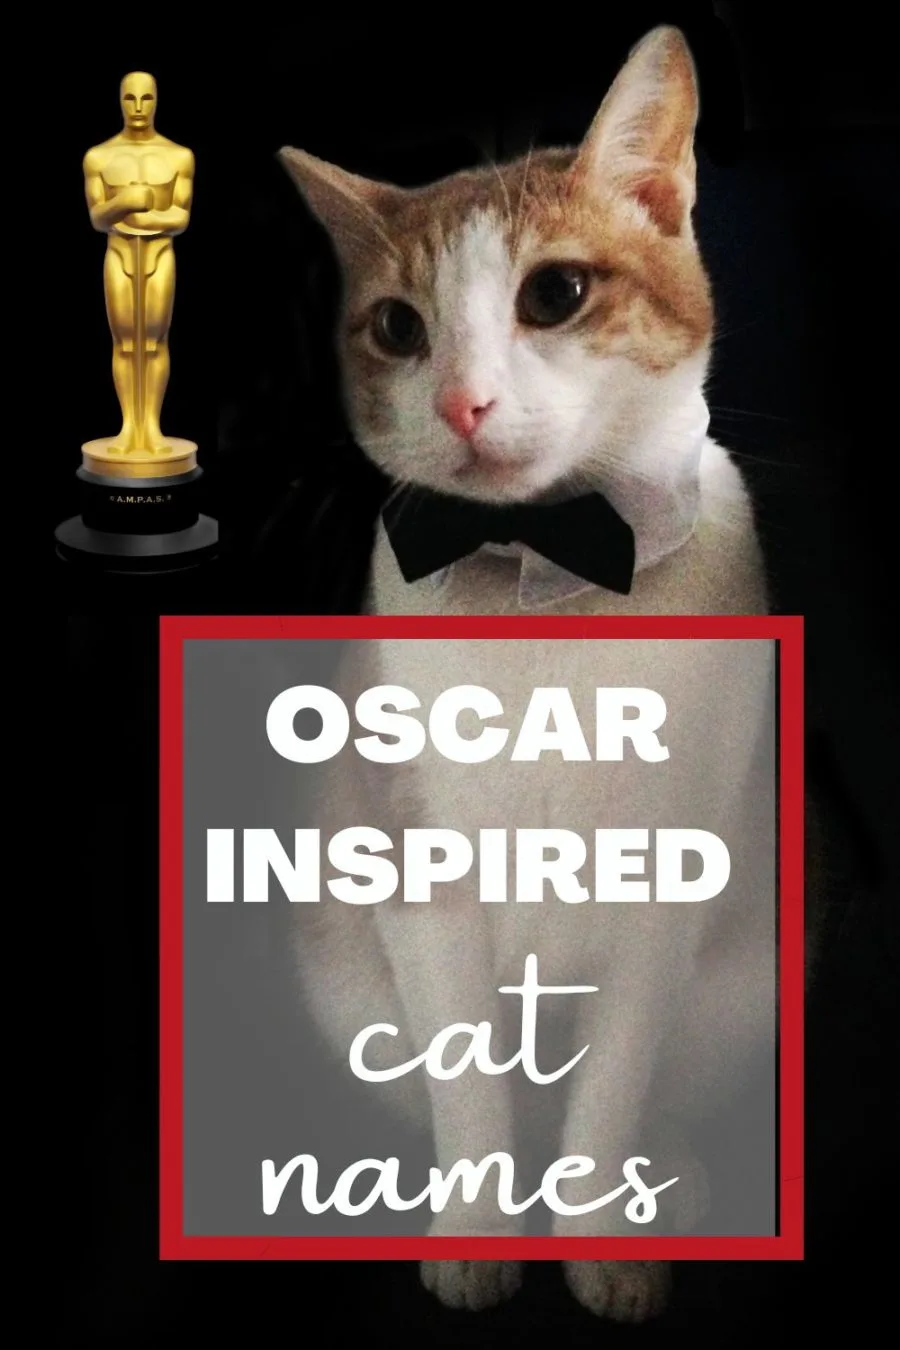 Oscar Winning Cat Names